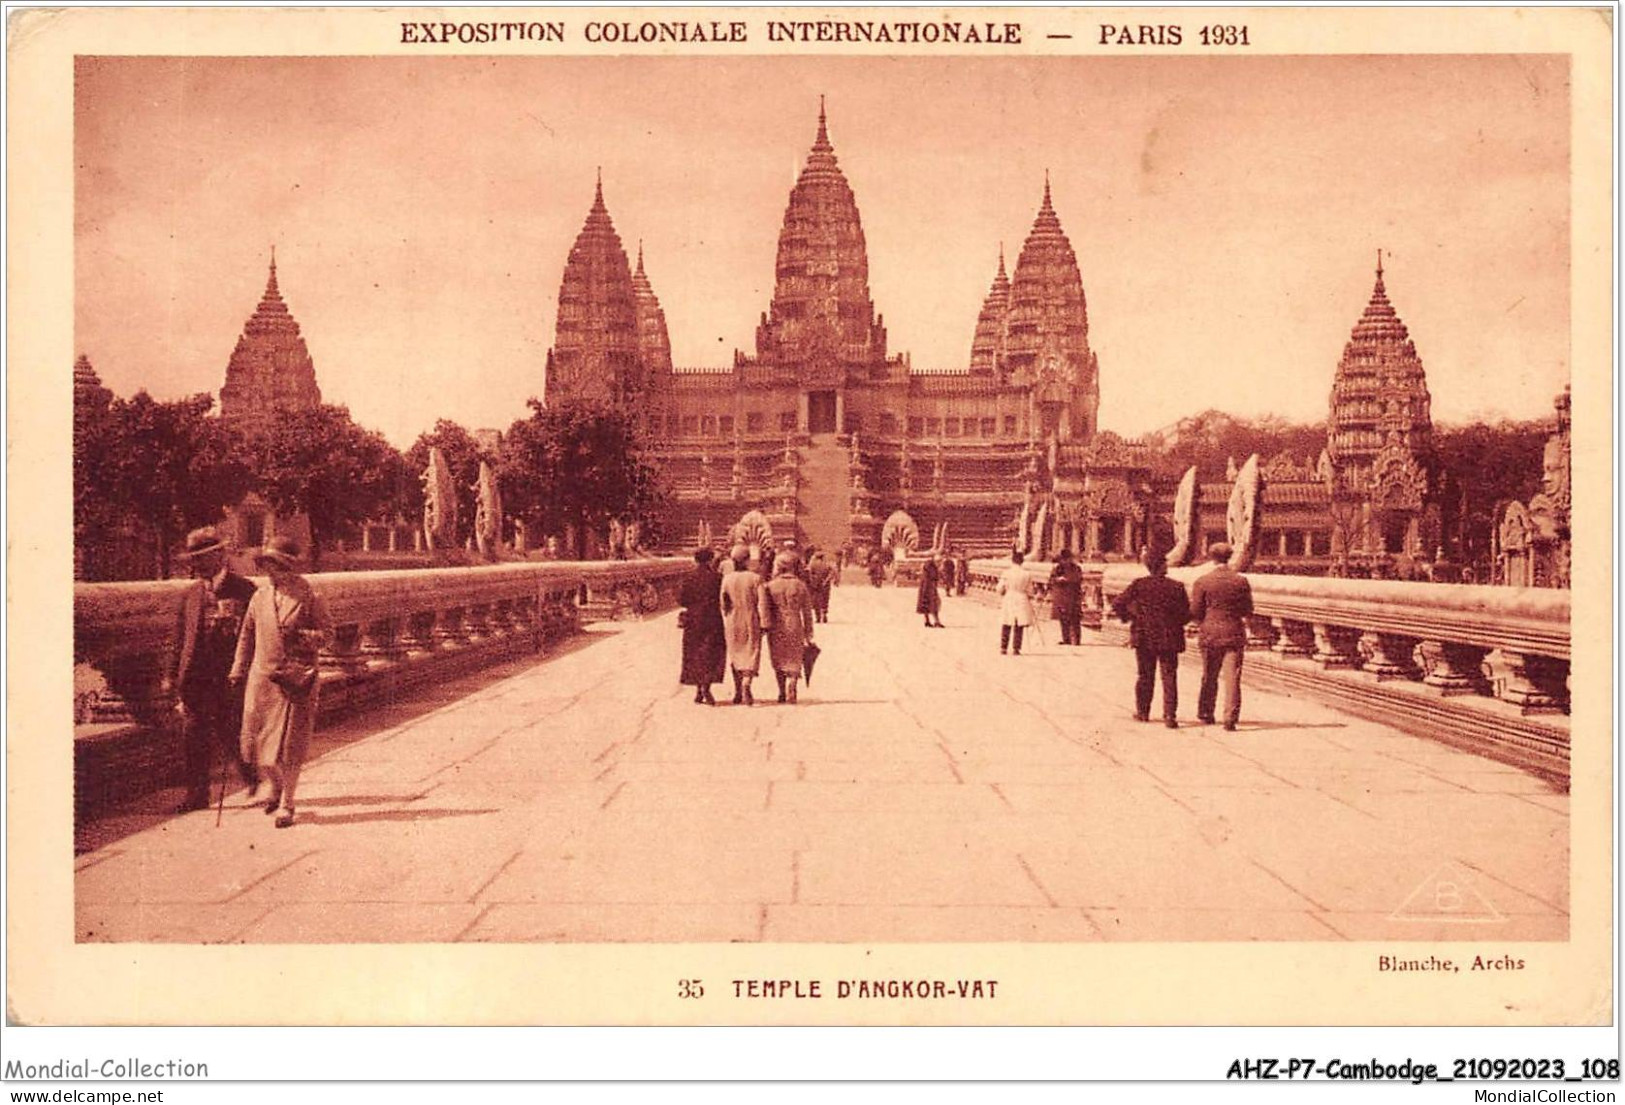 AHZP7-CAMBODGE-0650 - EXPOSITION COLONIALE INTERNATIONALE - PARIS 1931 - TEMPLE D'ANGKOR-VAT - Kambodscha